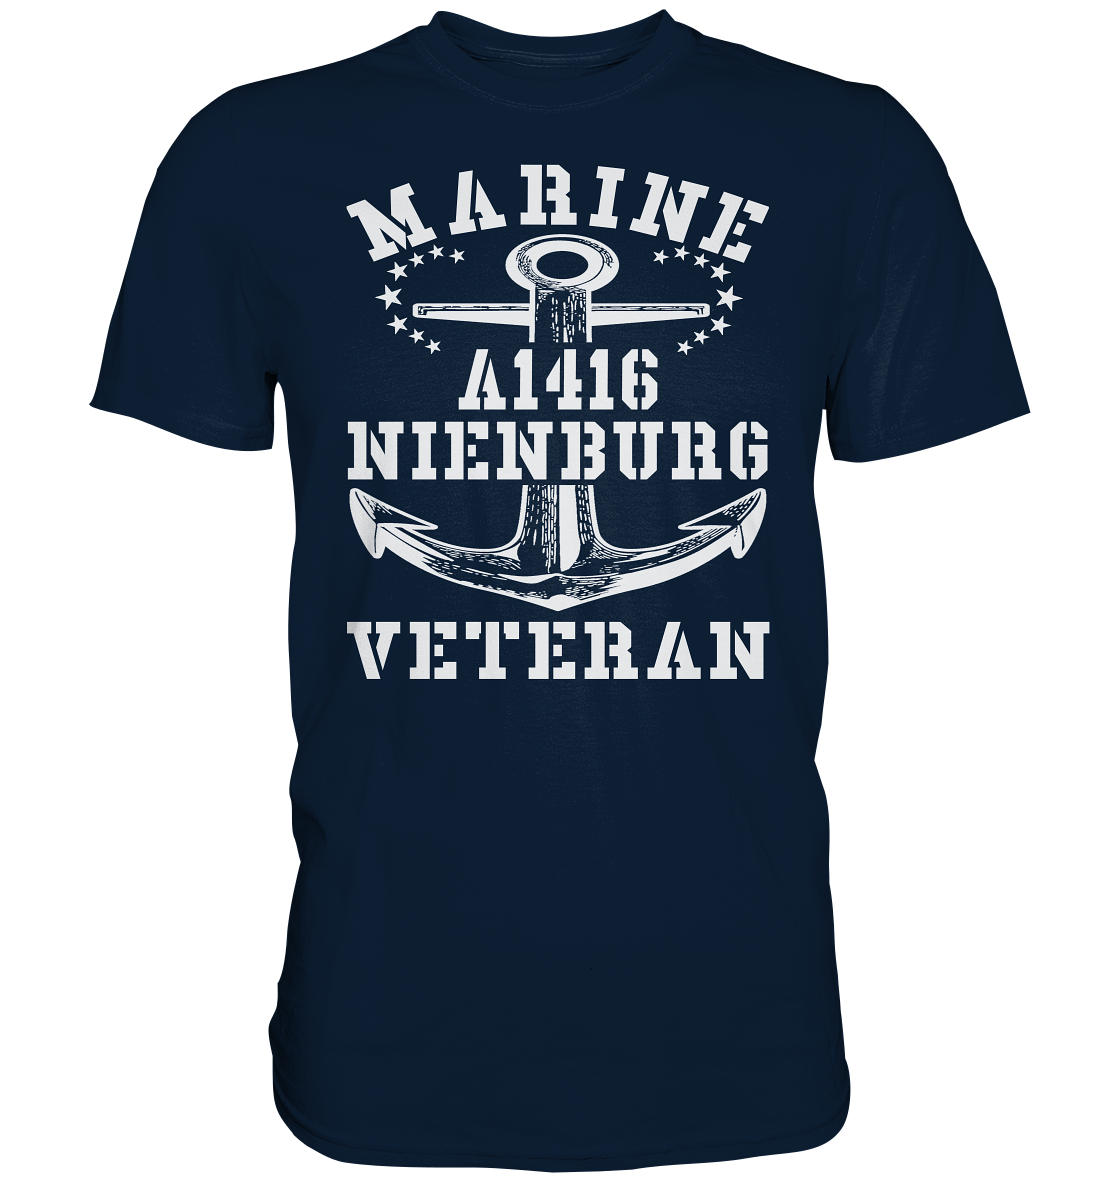 Troßschiff A1416 NIENBURG Marine Veteran  - Premium Shirt